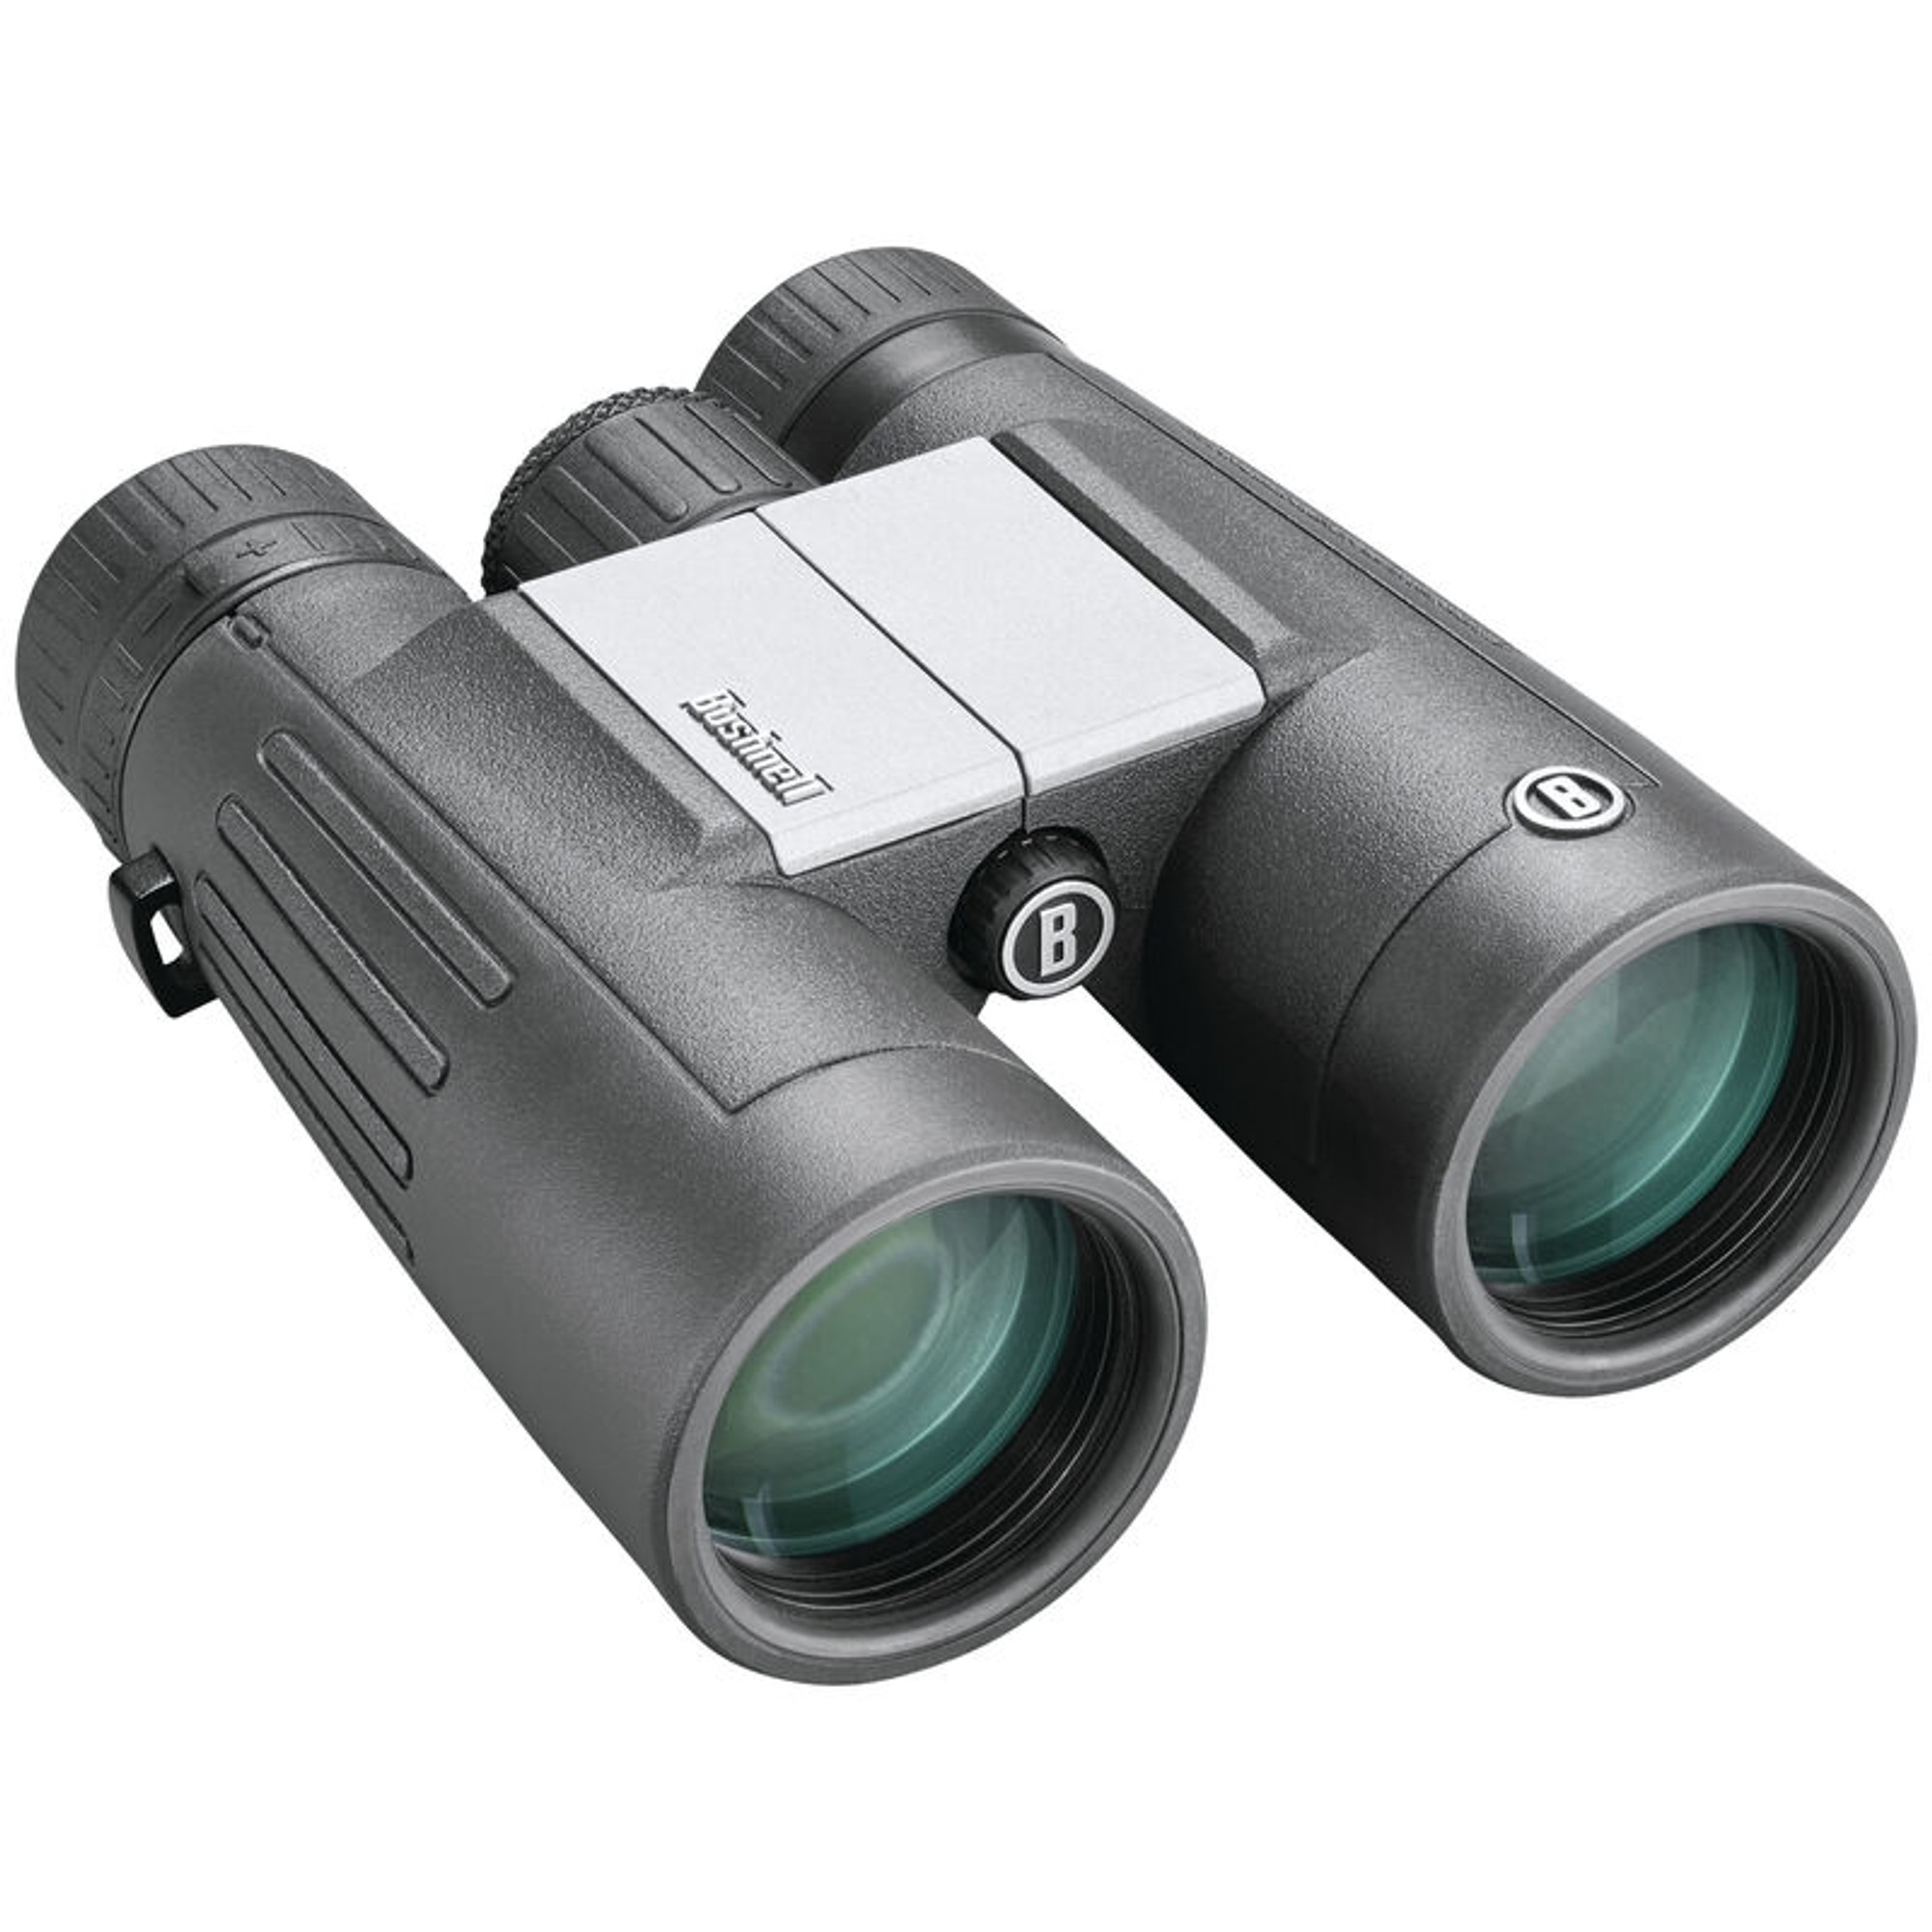 Powerview 2.0 10X42MM Binoculars